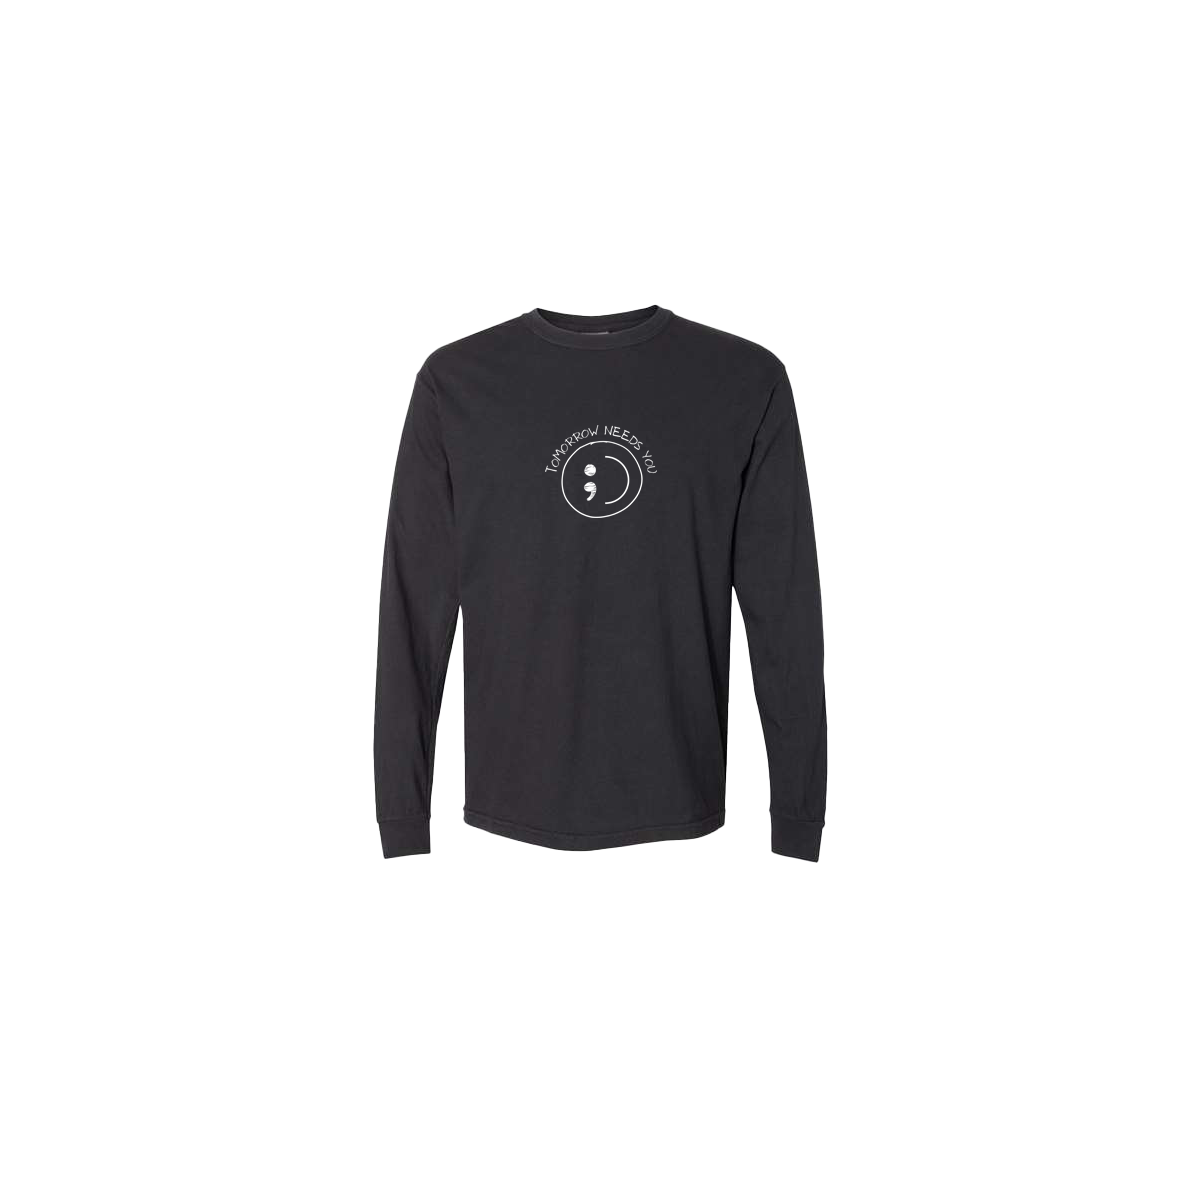 Tomorrow Needs You Embroidered Black Long Sleeve Tshirt - Mental Health Awareness Clothing